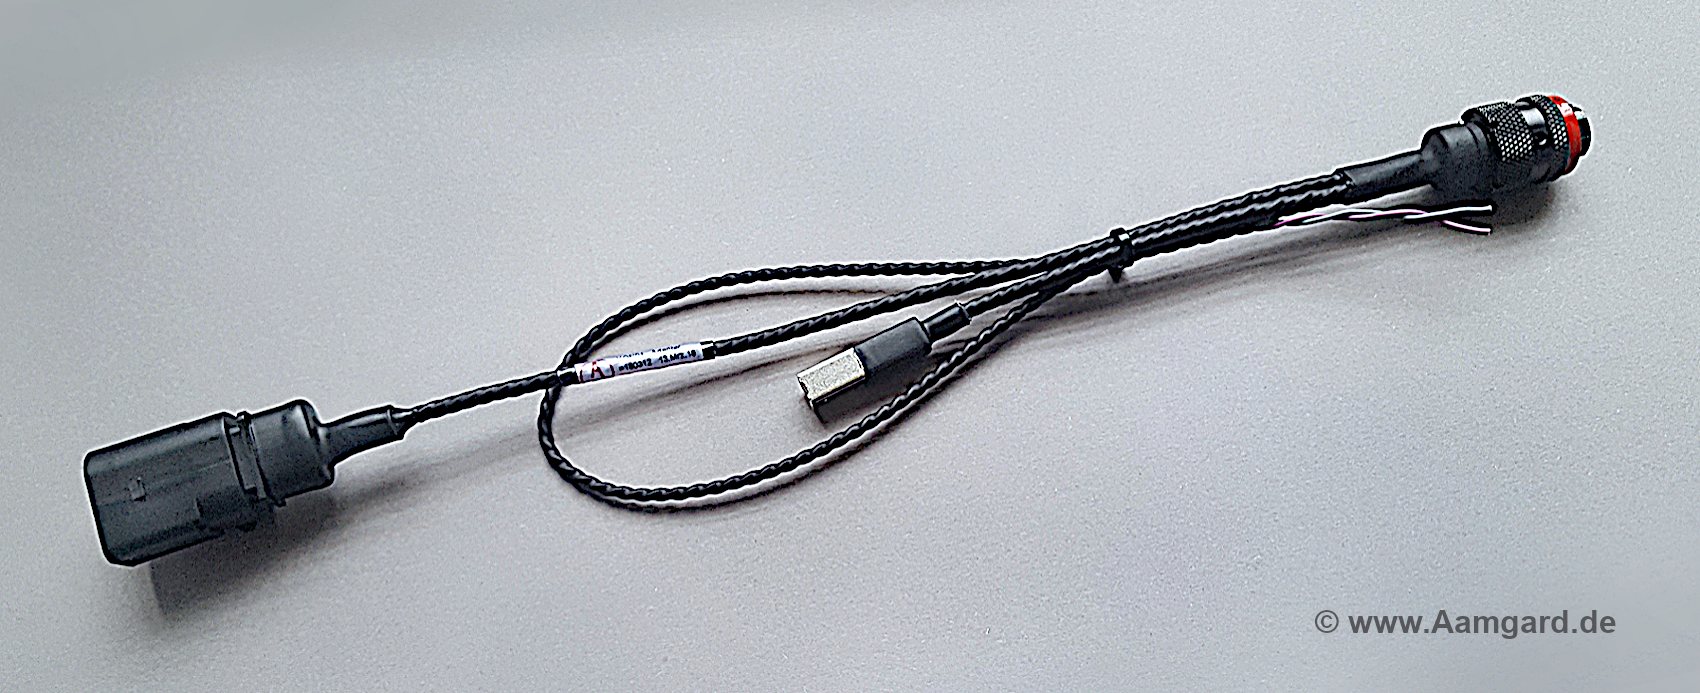 USB data cord